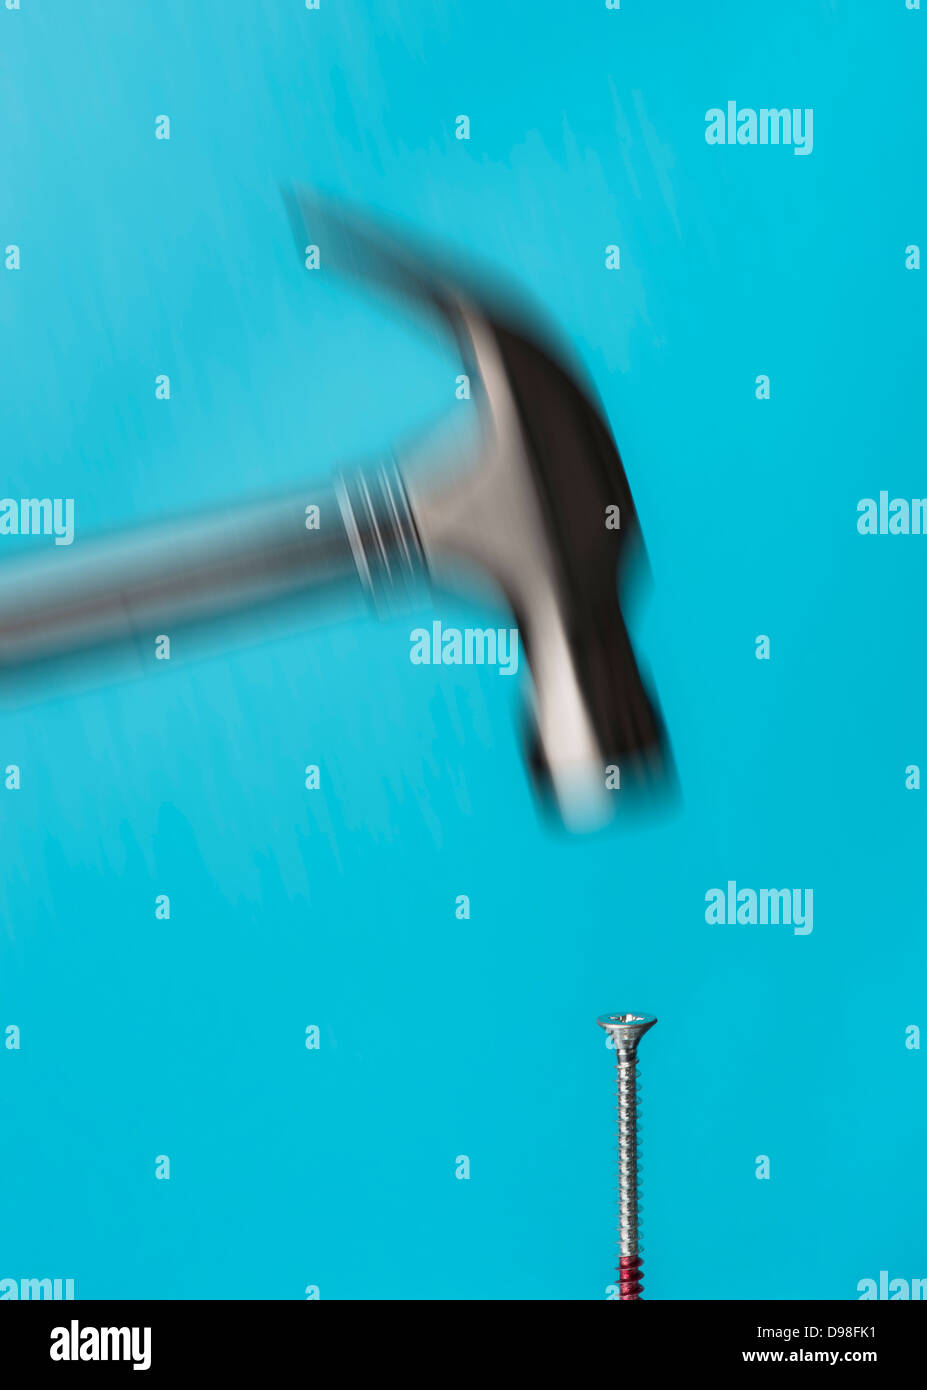 Hertogin envelop Decoratie Blurred motion of hammer hitting a screw Stock Photo - Alamy